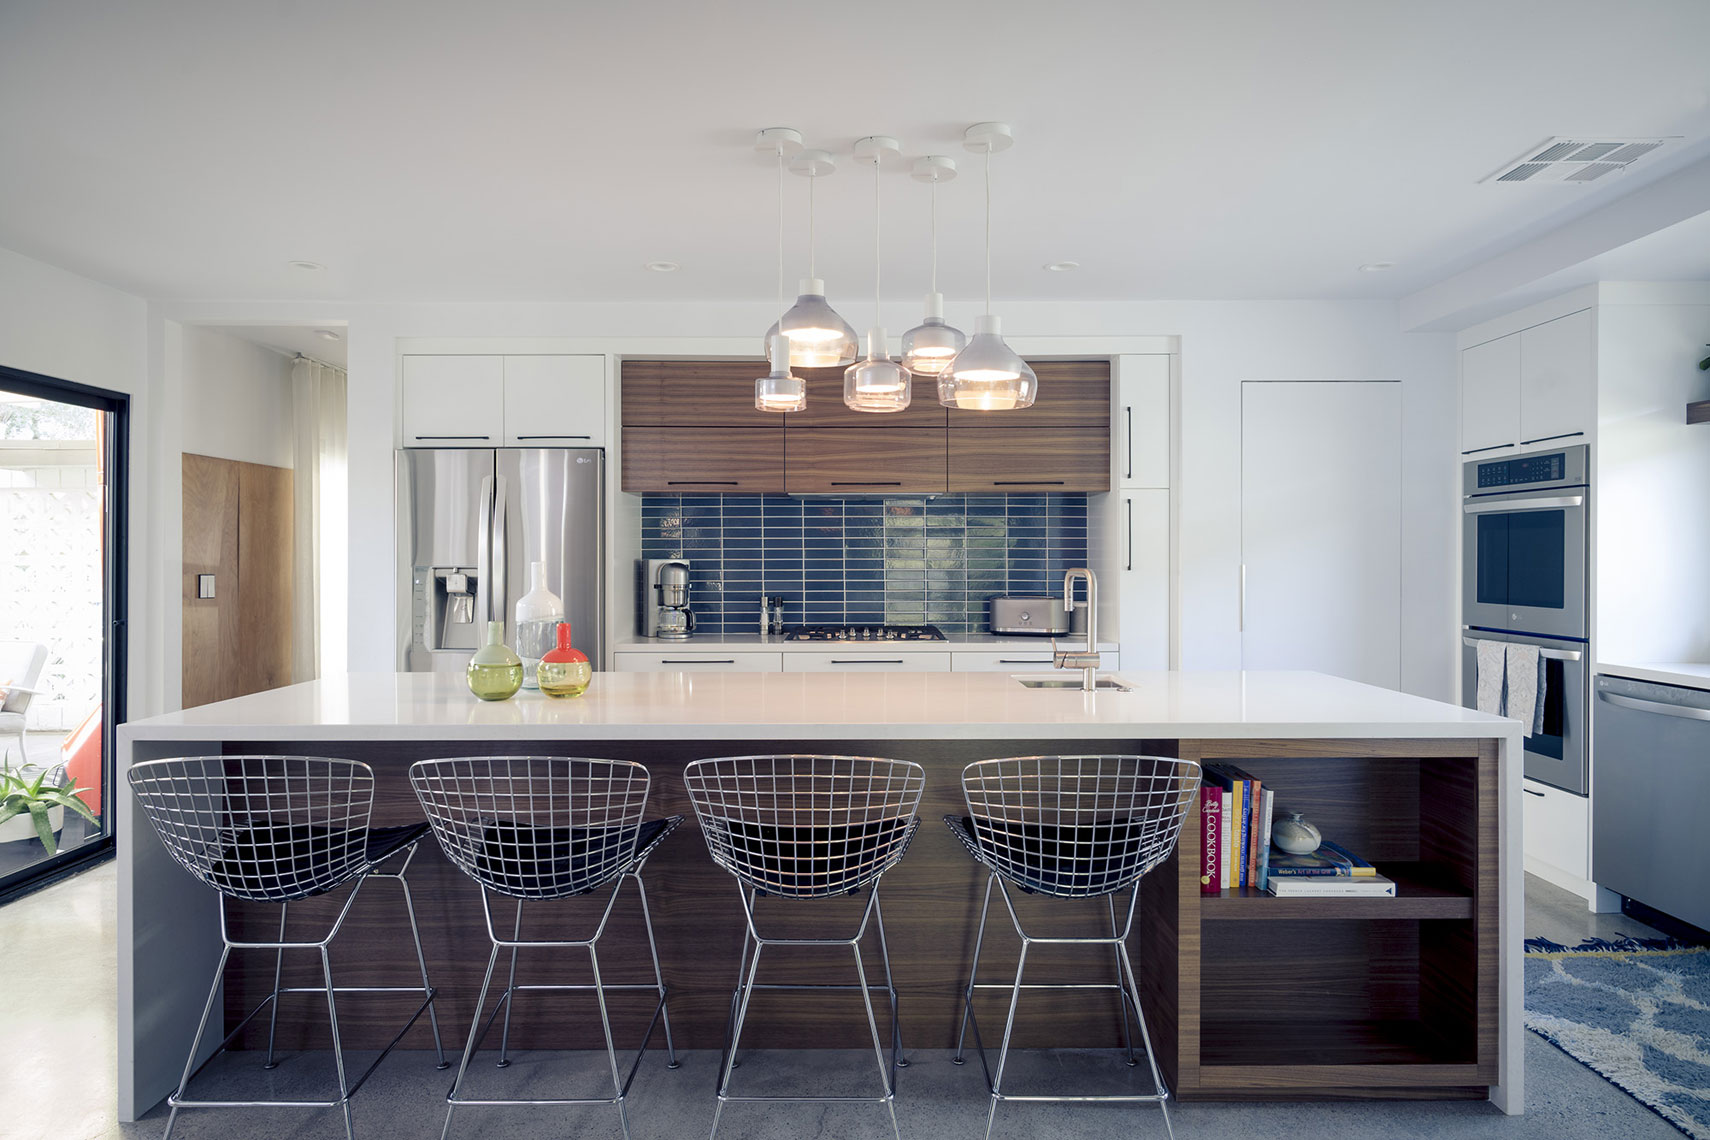 jeff-green-residential-architecture-interior-kitchen-las-vegas